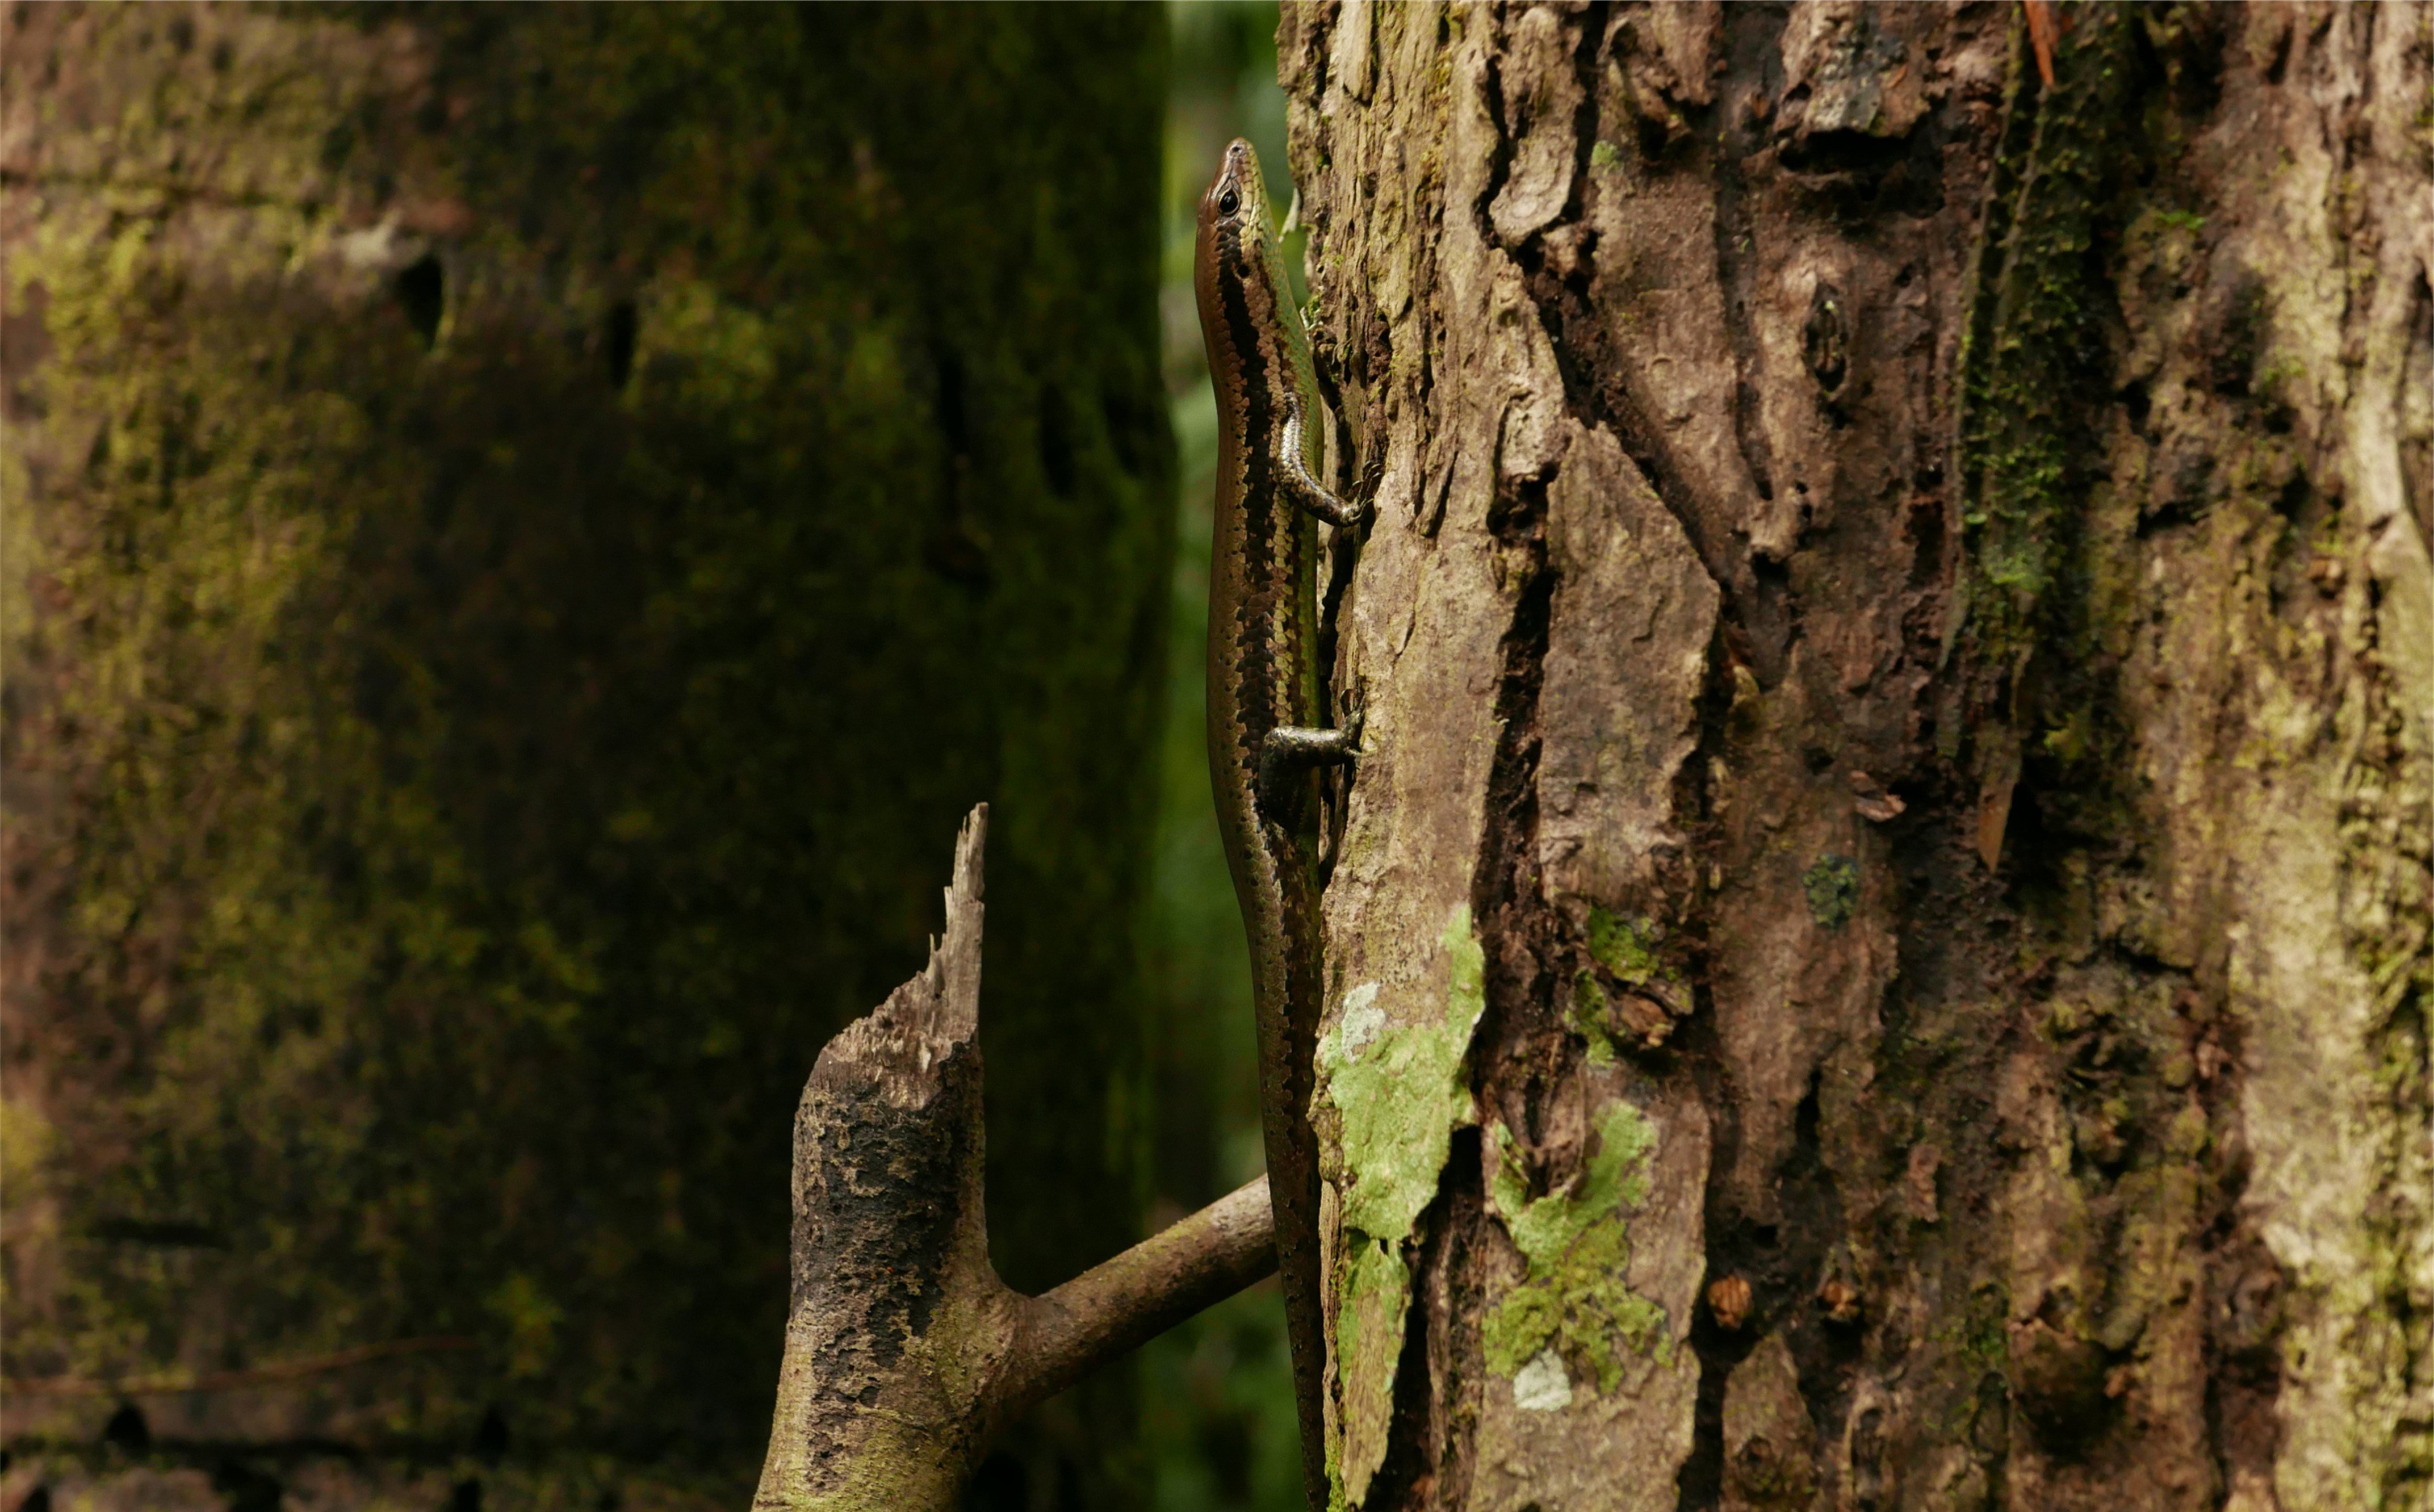 A lizard on the side of  a tree